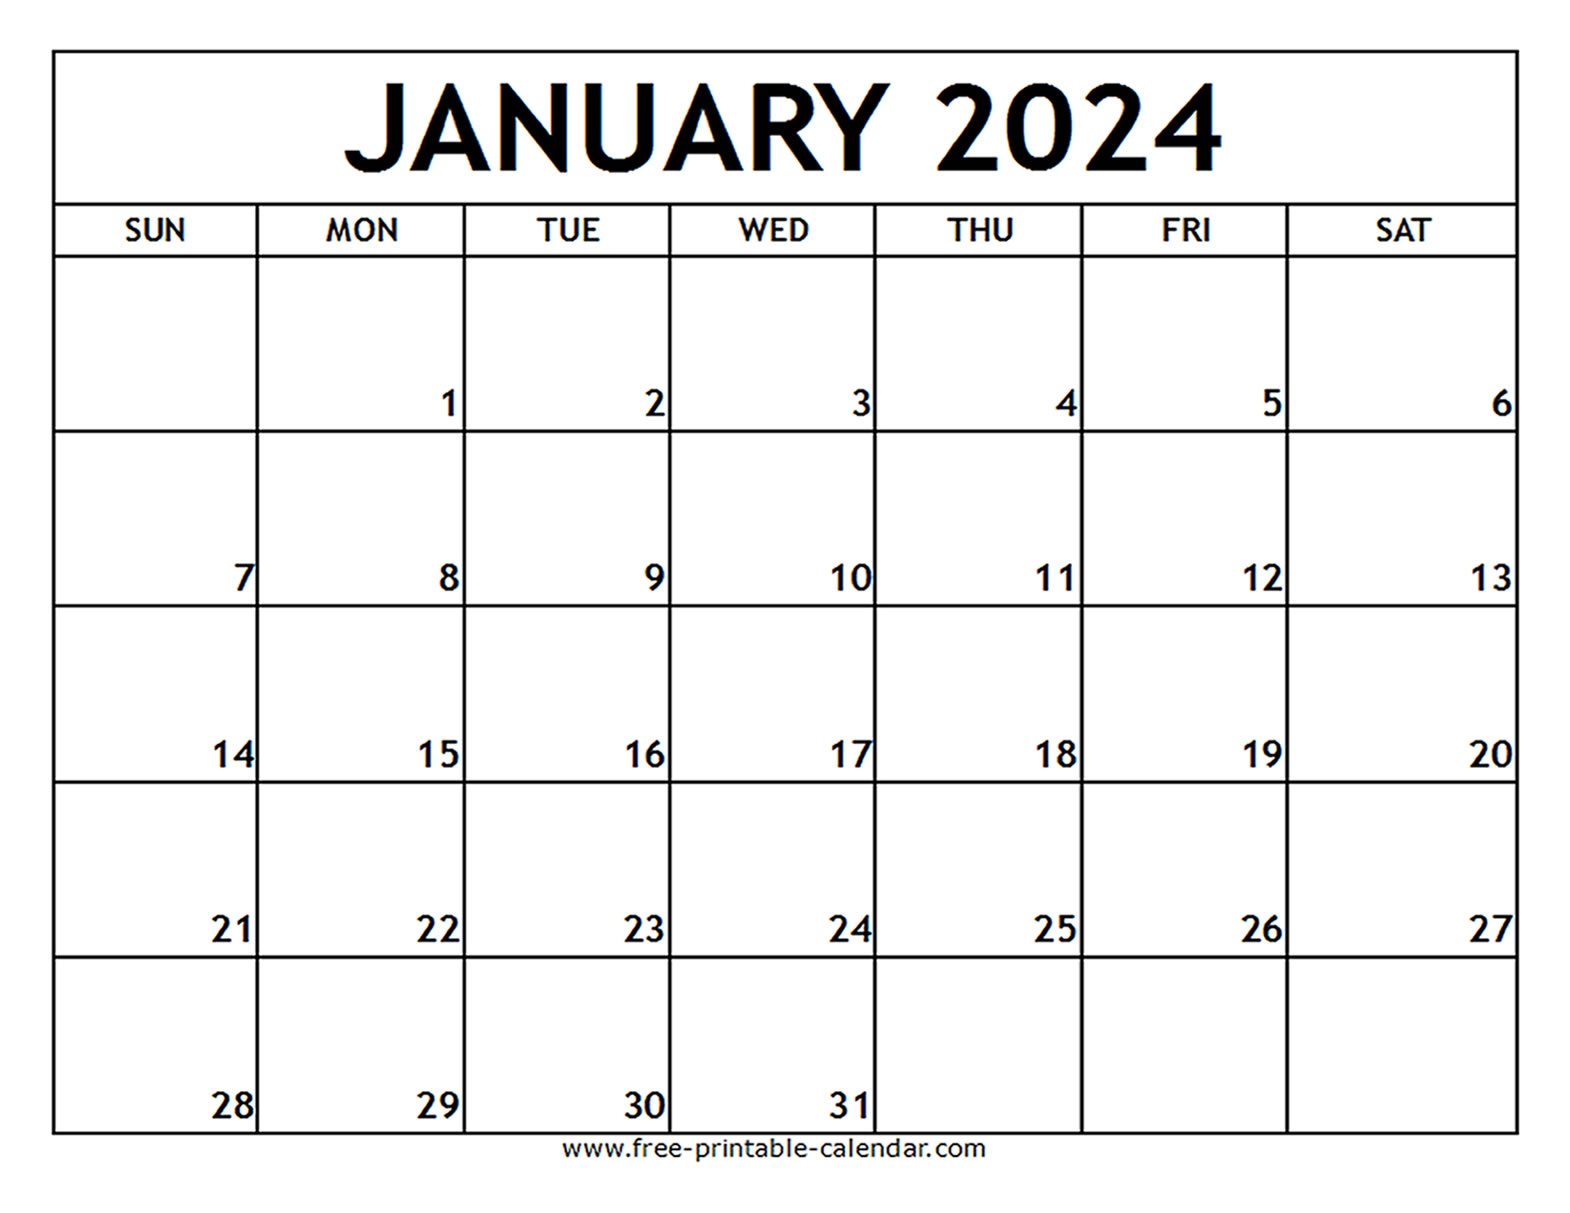 January 2024 Printable Calendar - Free-Printable-Calendar regarding Free Printable Blank Calendar January 2024 Calendar Template